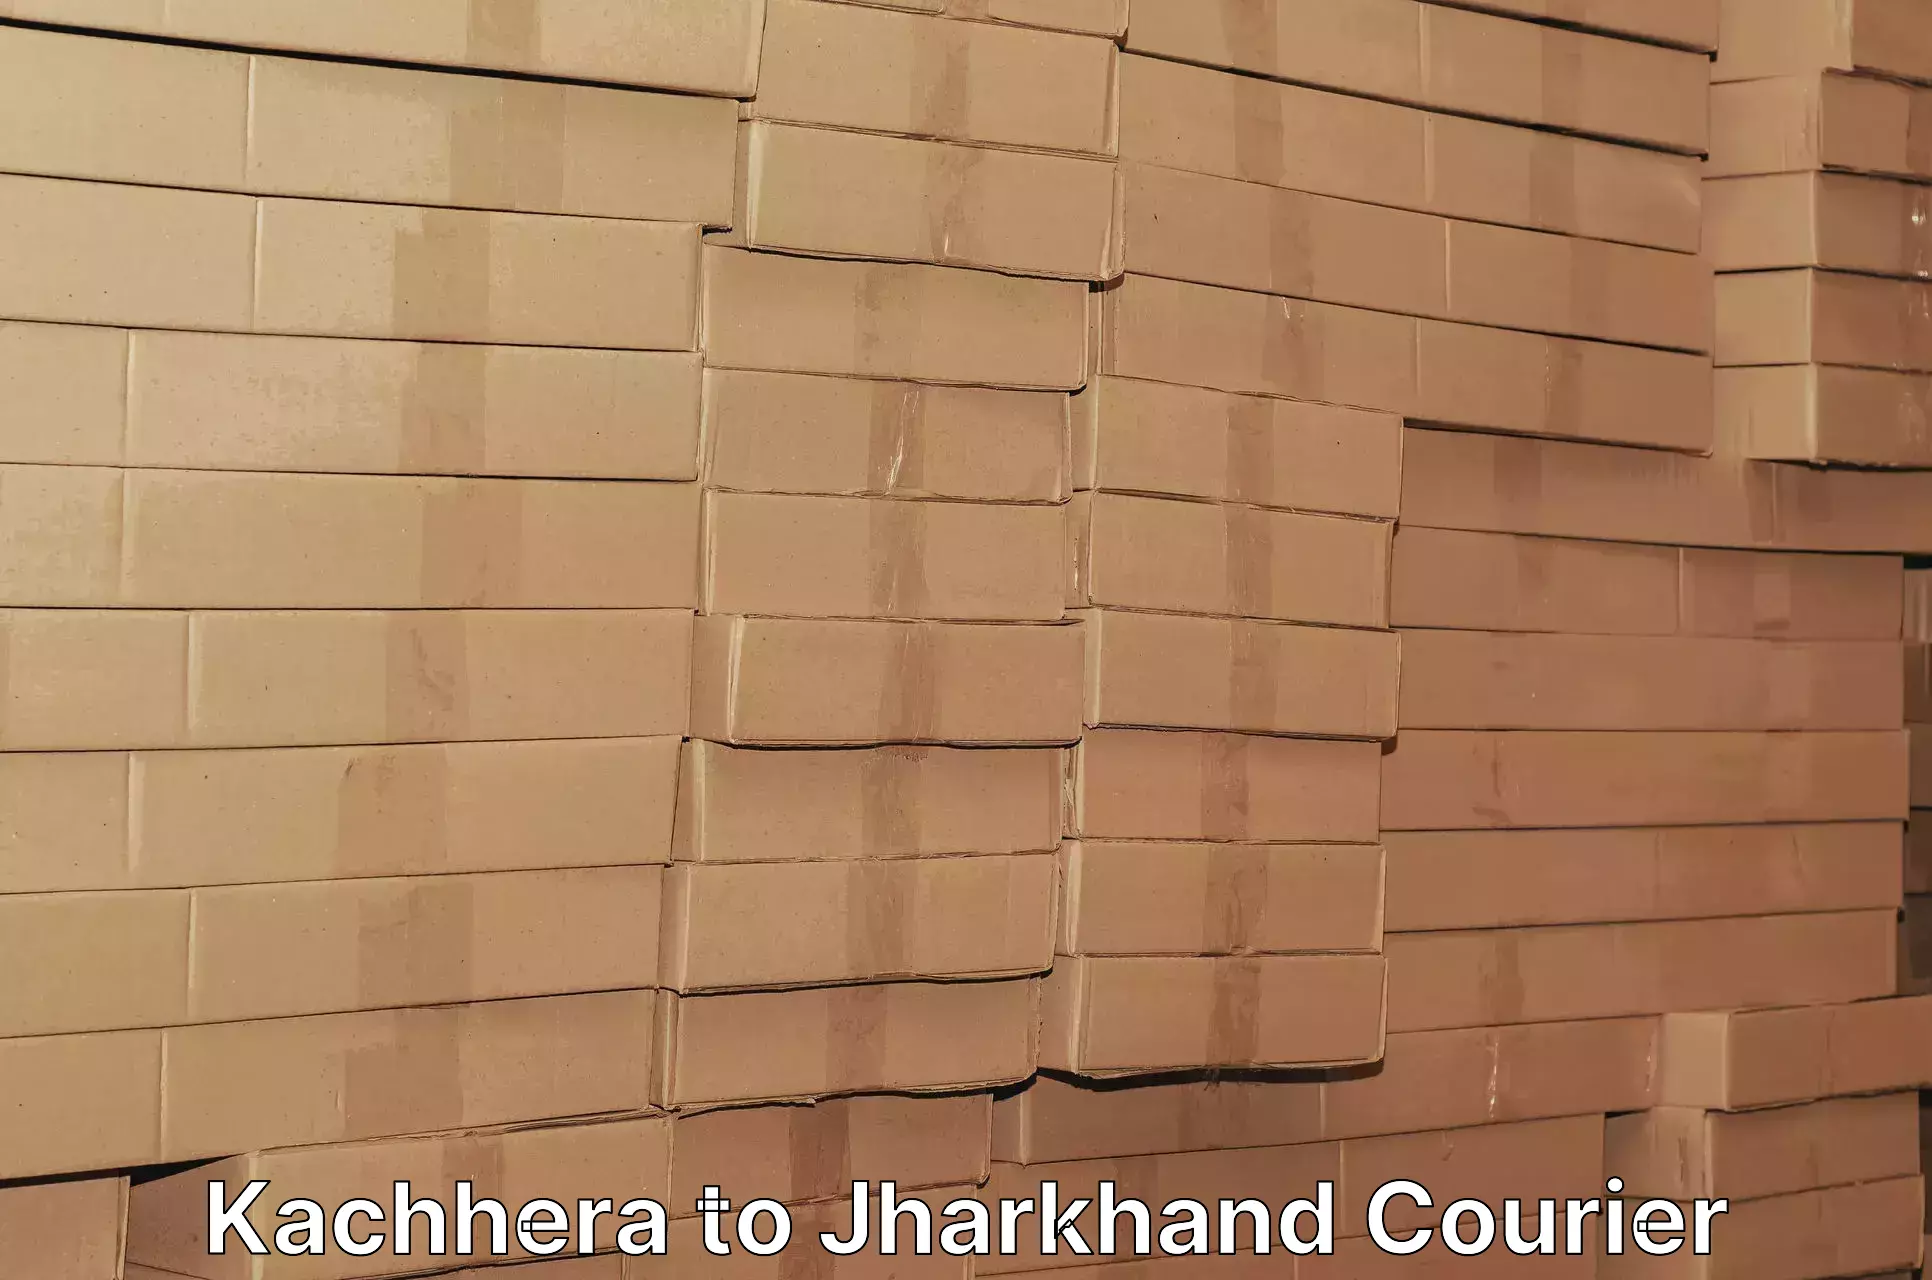 Efficient logistics management Kachhera to Ranchi